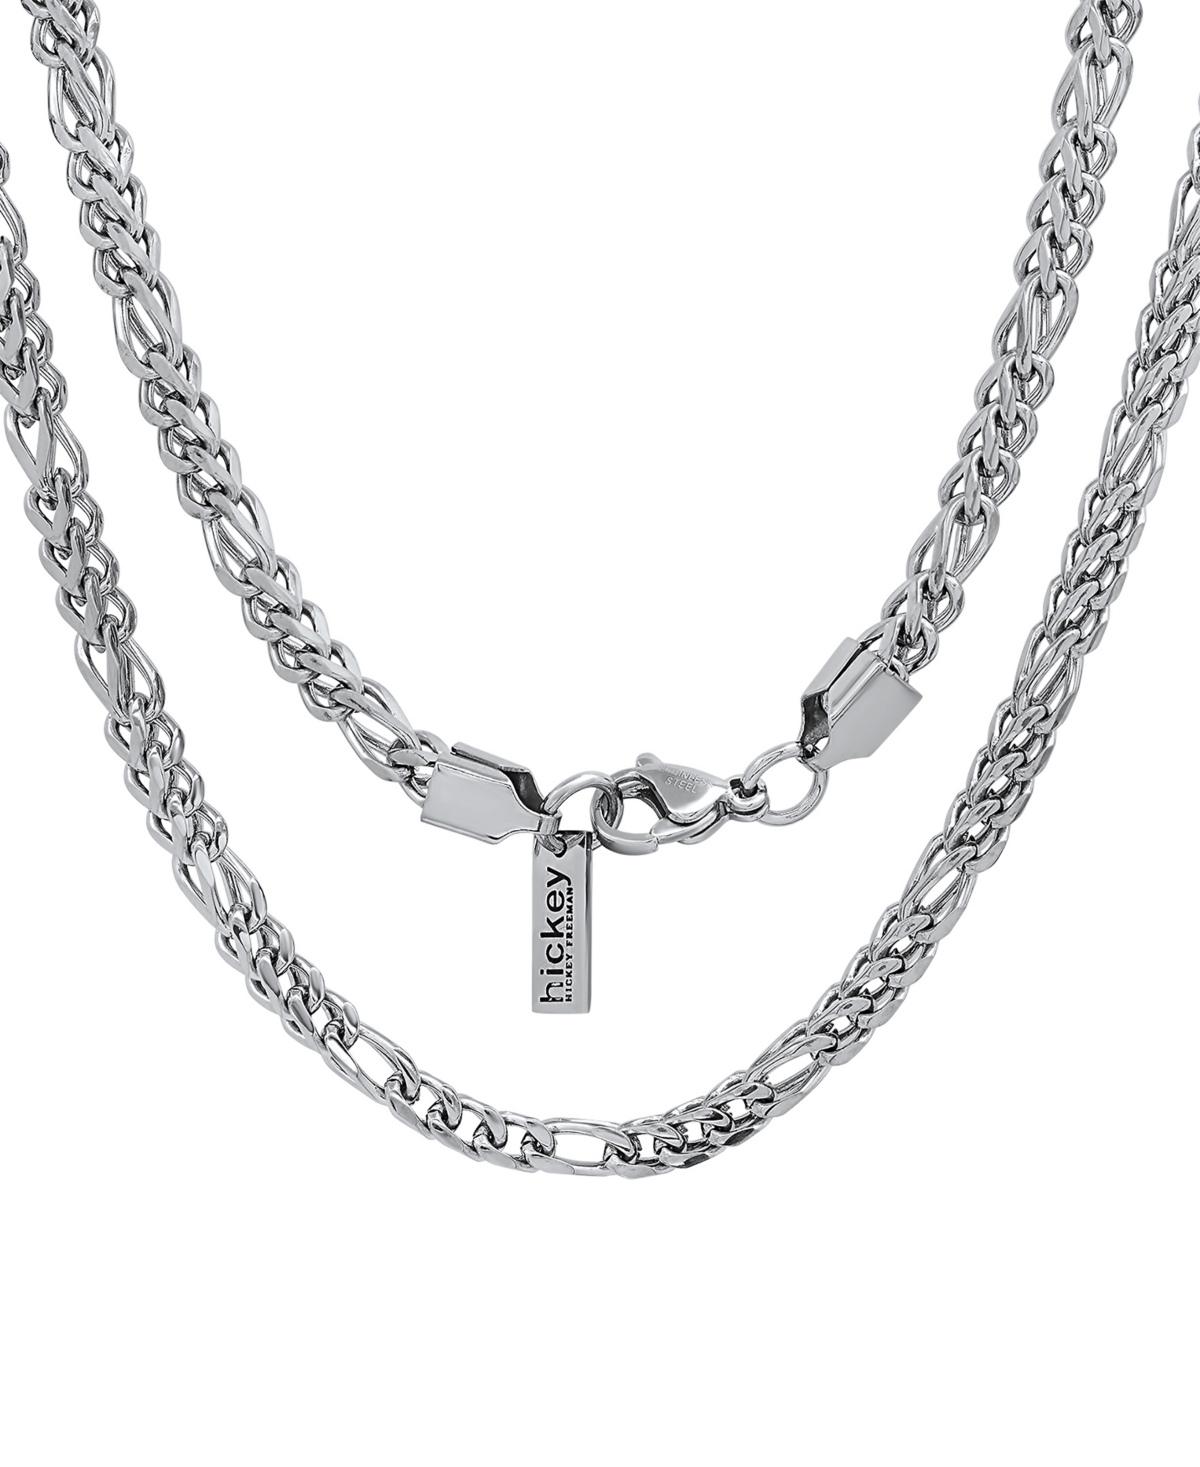 Hmy Jewelry Figaro Link Single Strand Chain In Gray